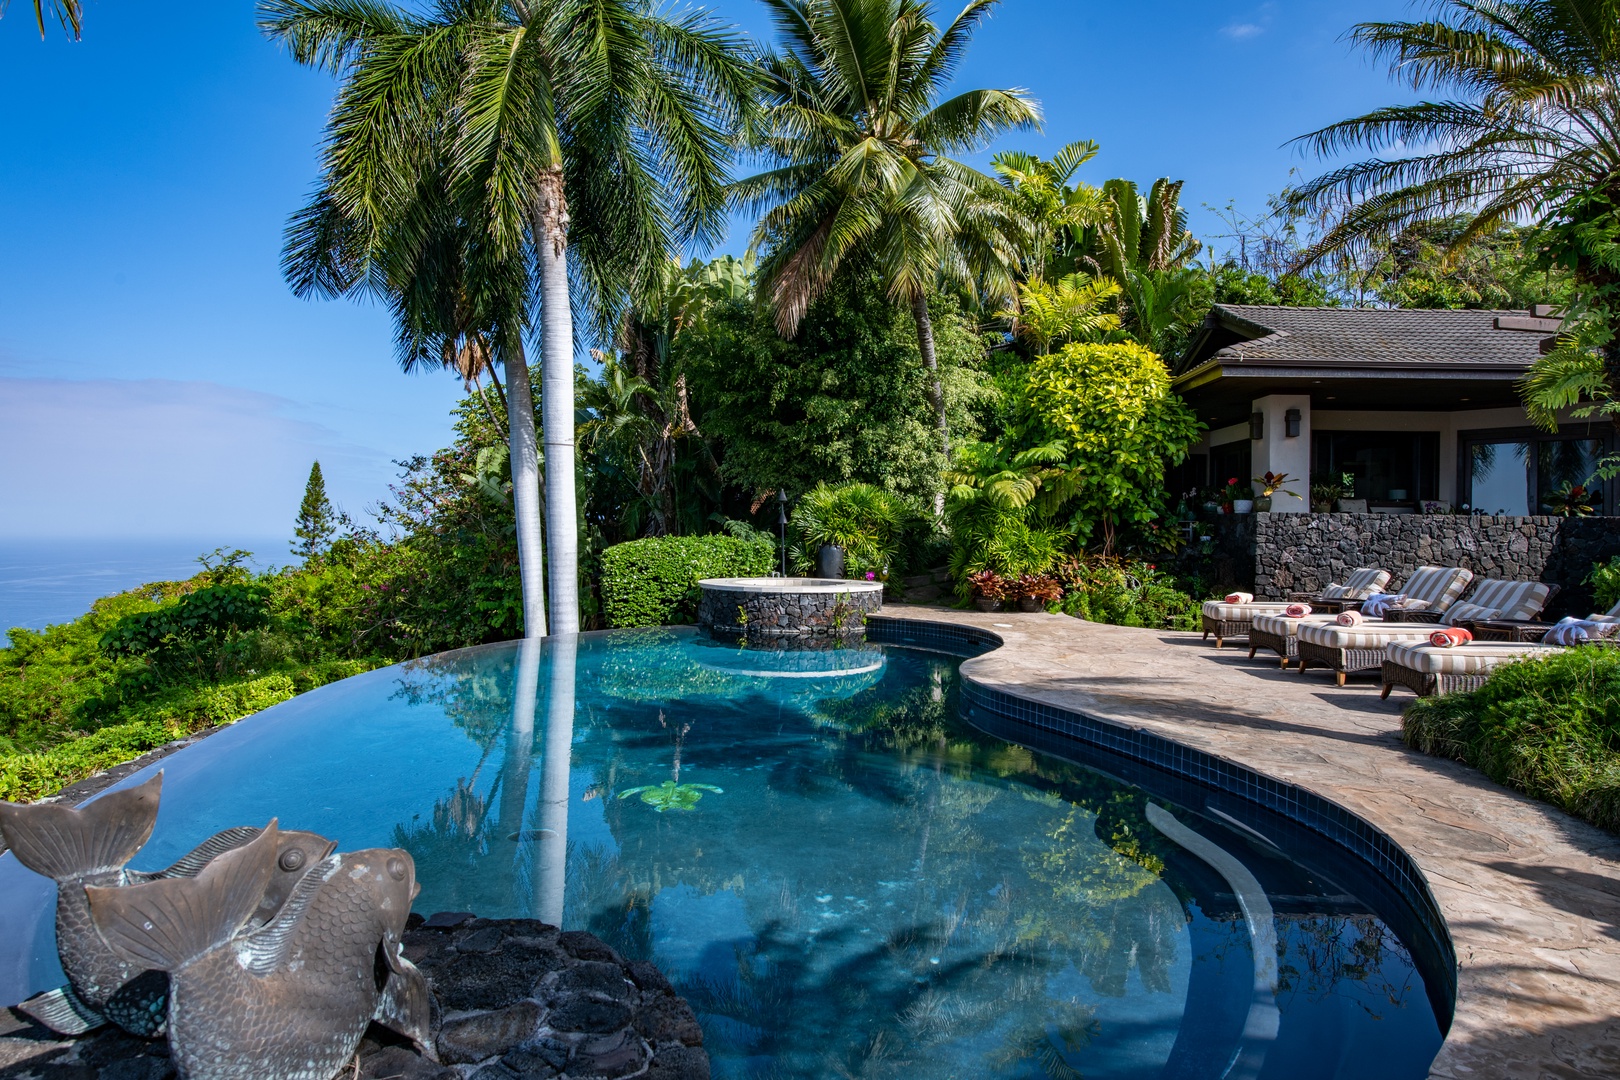 Kailua Kona Vacation Rentals, Hale Wailele** - Tropical resort getaway for your vacation